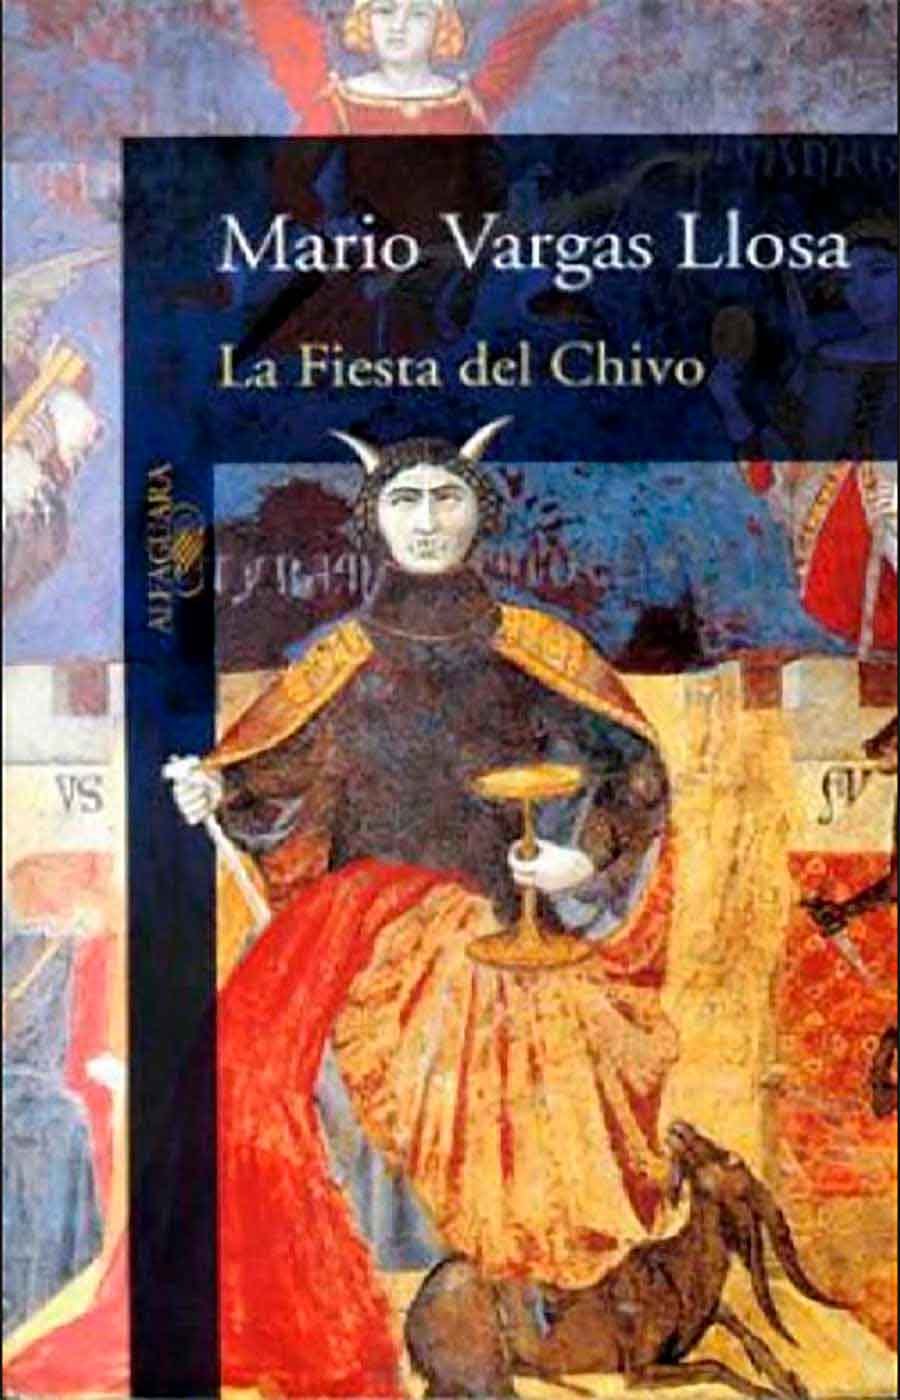 La fiesta del Chivo, novela de Mario Vargas Llosa sobre la era del dictador Rafael Leónidas Trujillo.